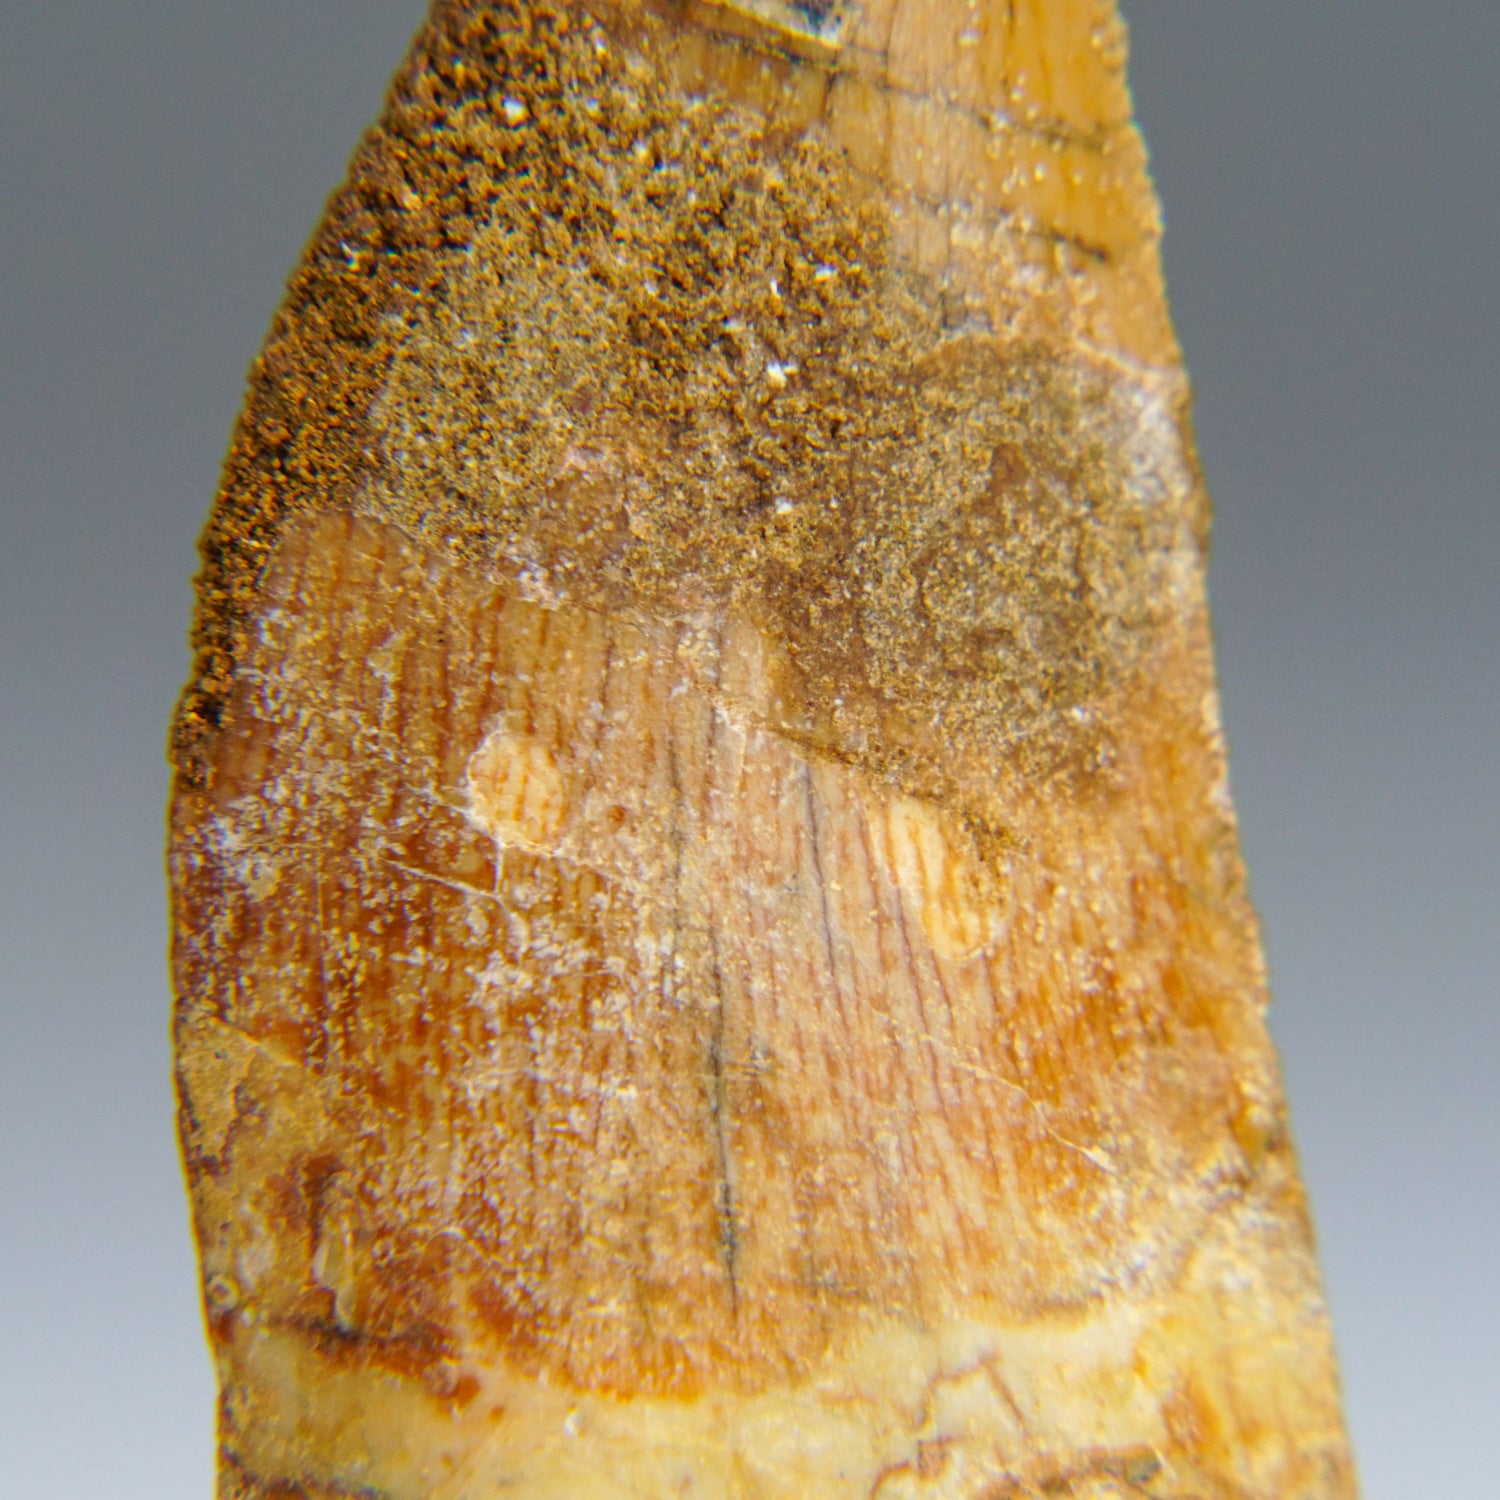 Genuine Carcharodontosaurus Tooth in Display Box (10.8 grams)